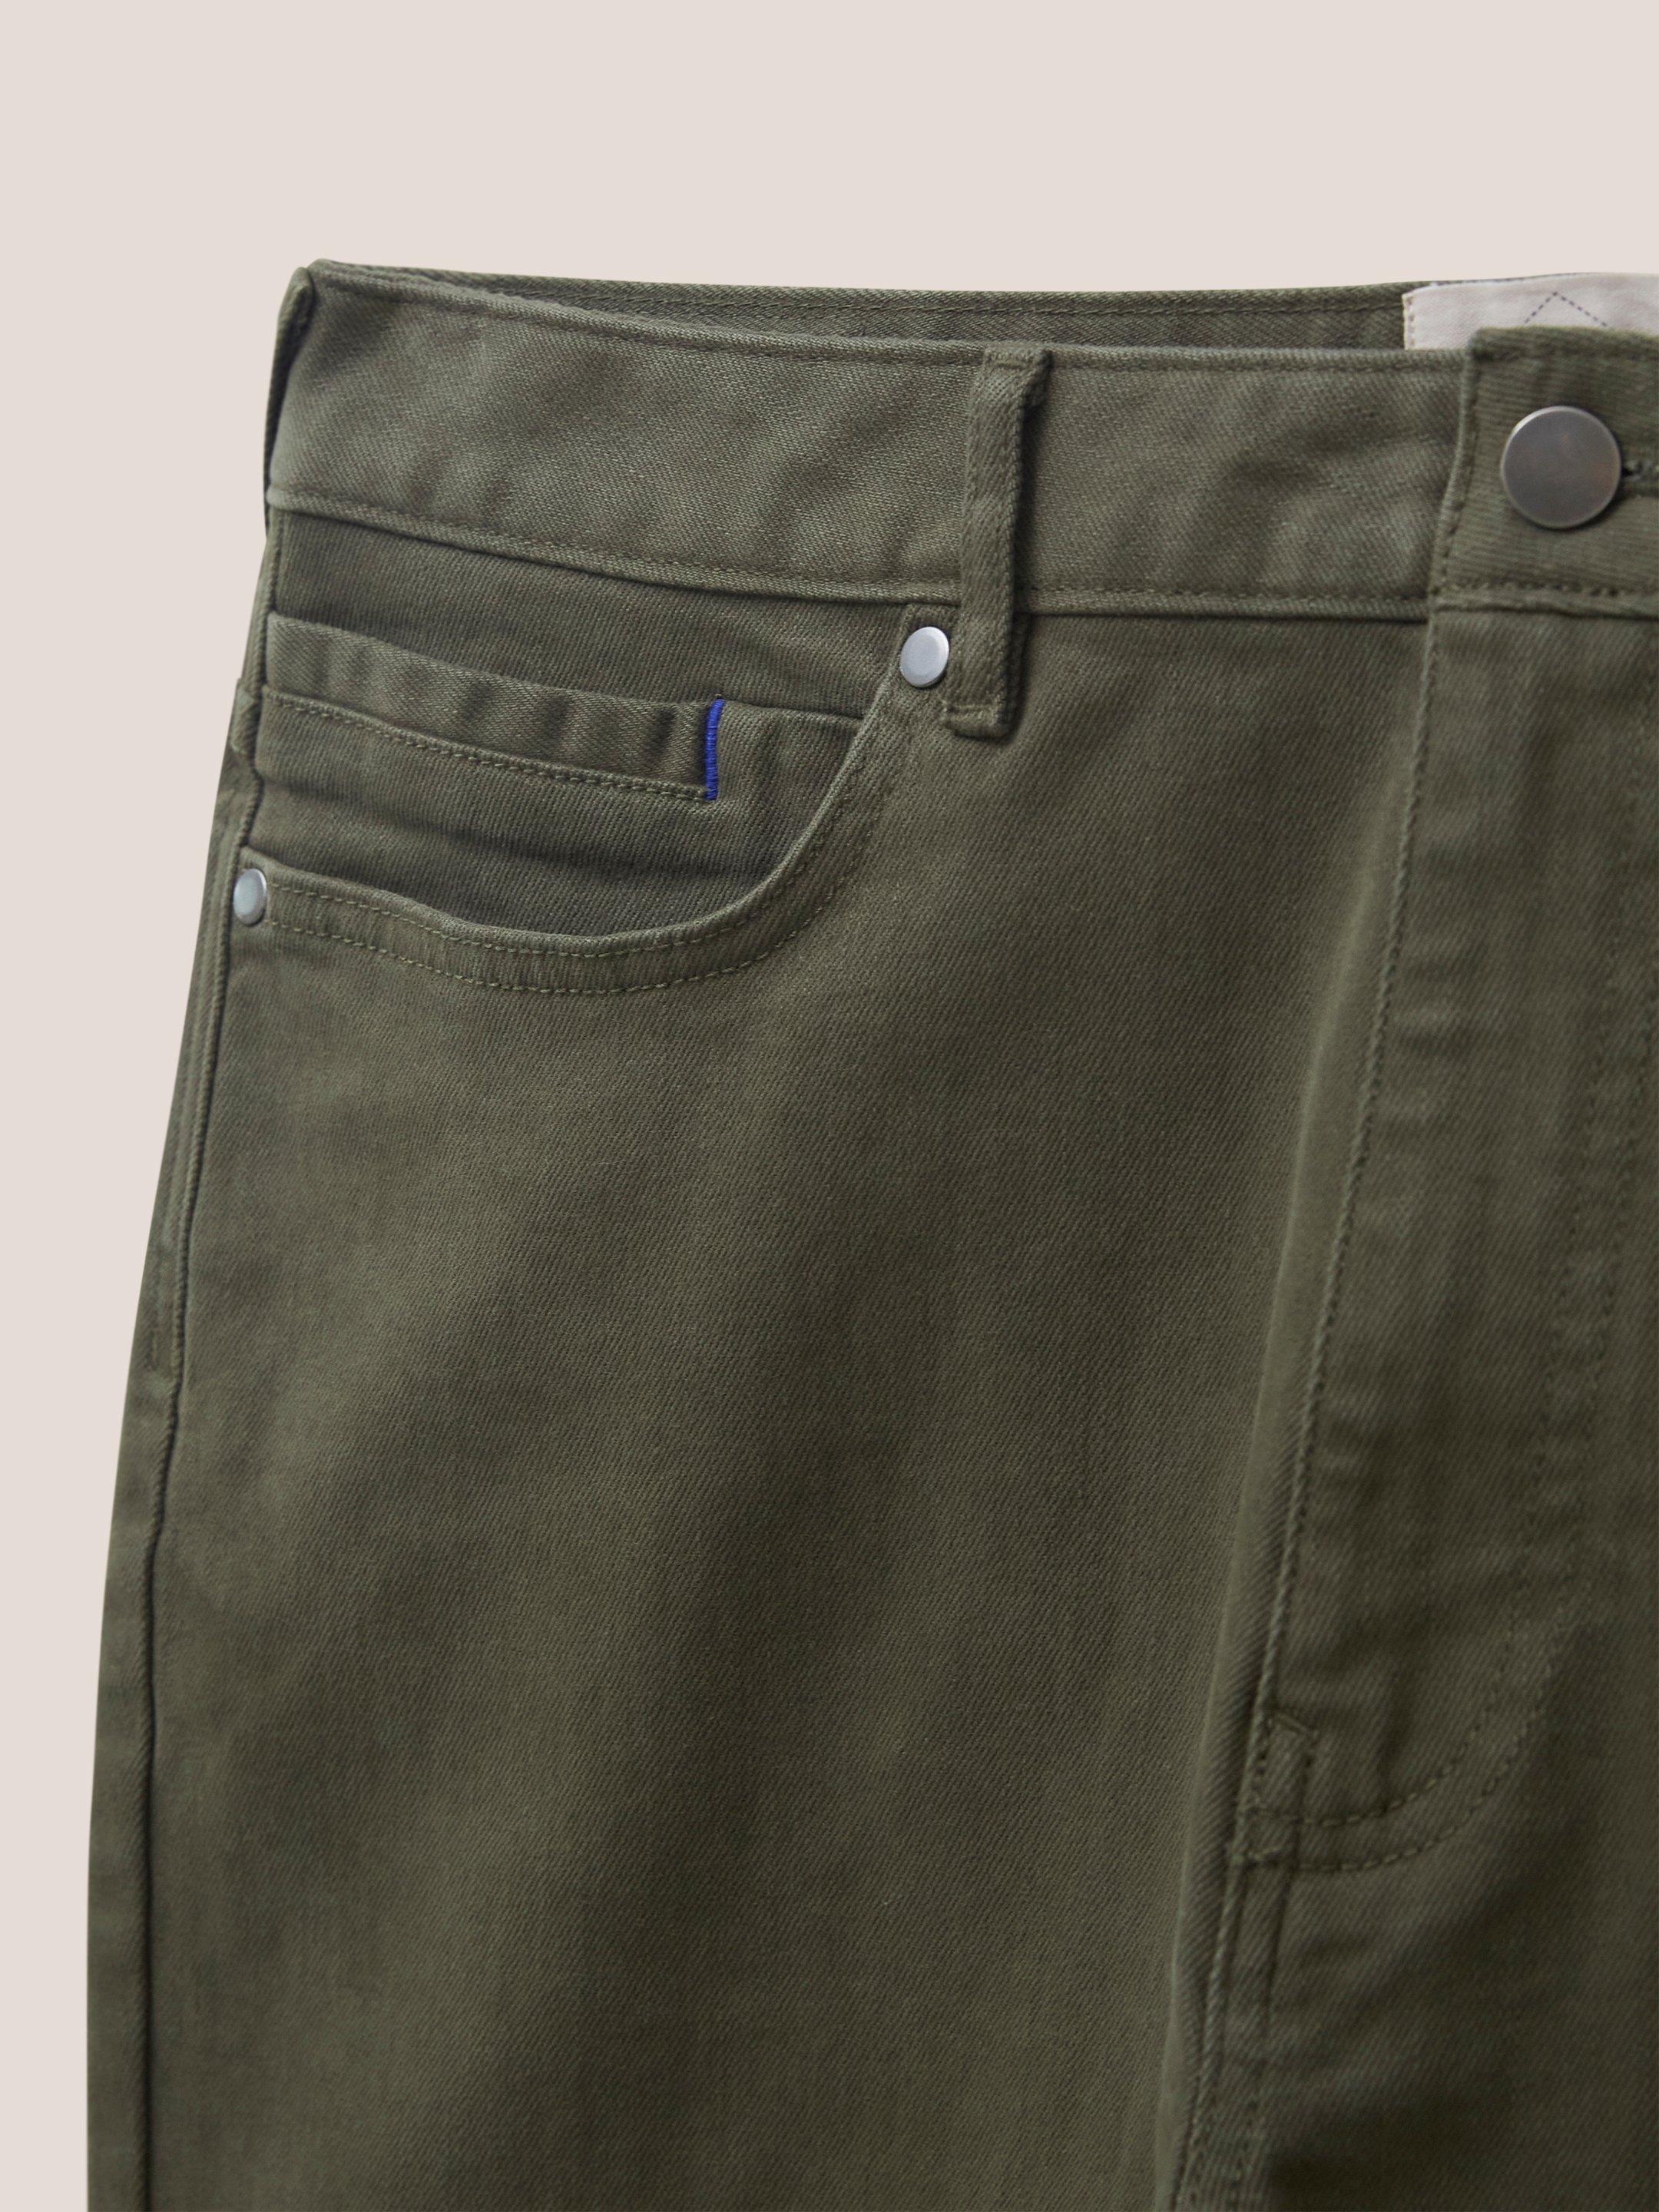 Kirby Twill 5 Pocket Trouser in KHAKI GRN - FLAT DETAIL